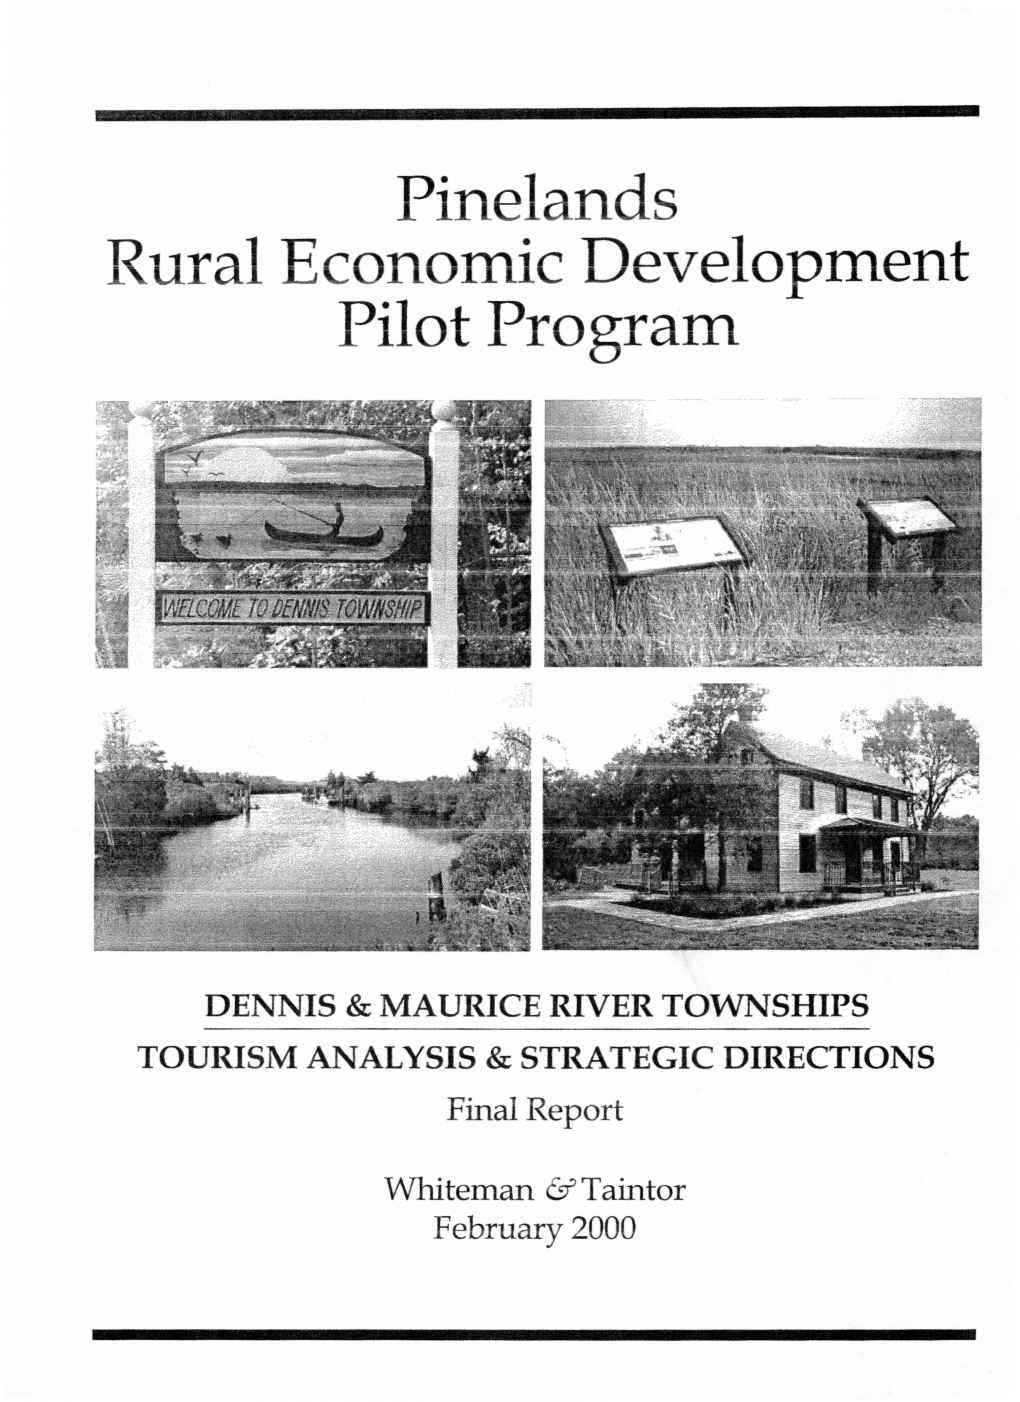 Rural Economic Development Pilot Program